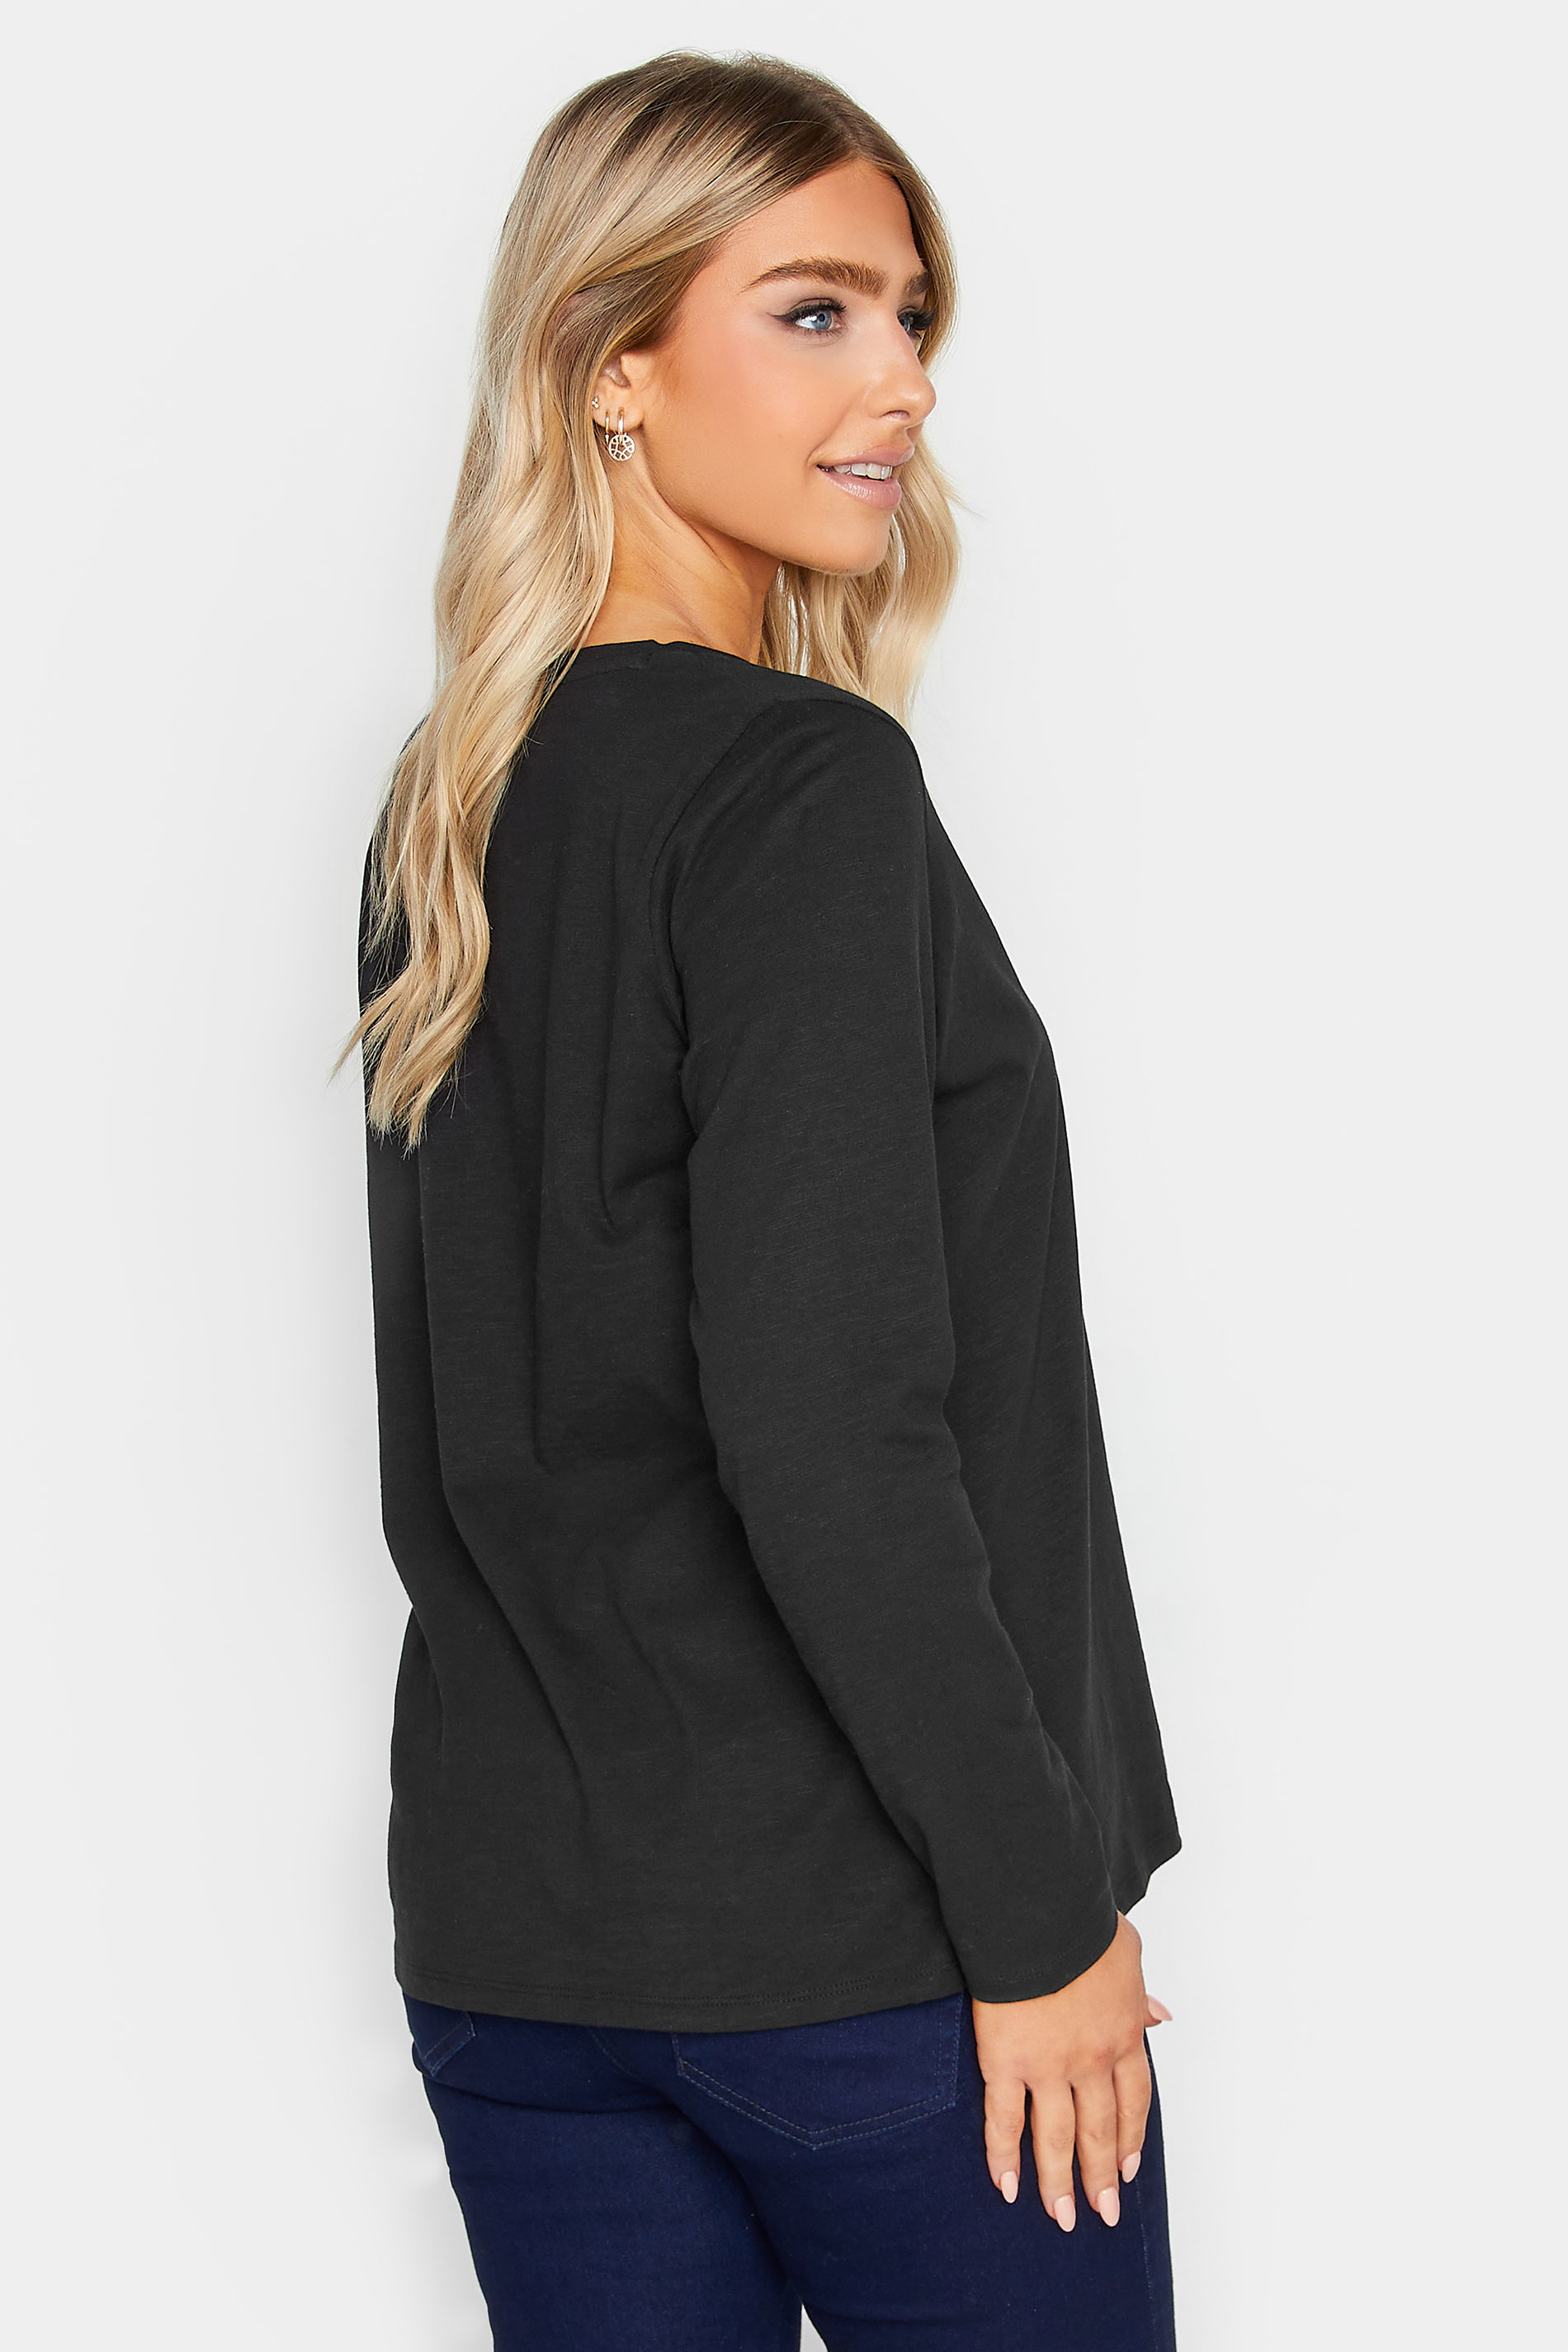 M&Co Black V-Neck Long Sleeve Cotton Blend T-Shirt | M&Co 3